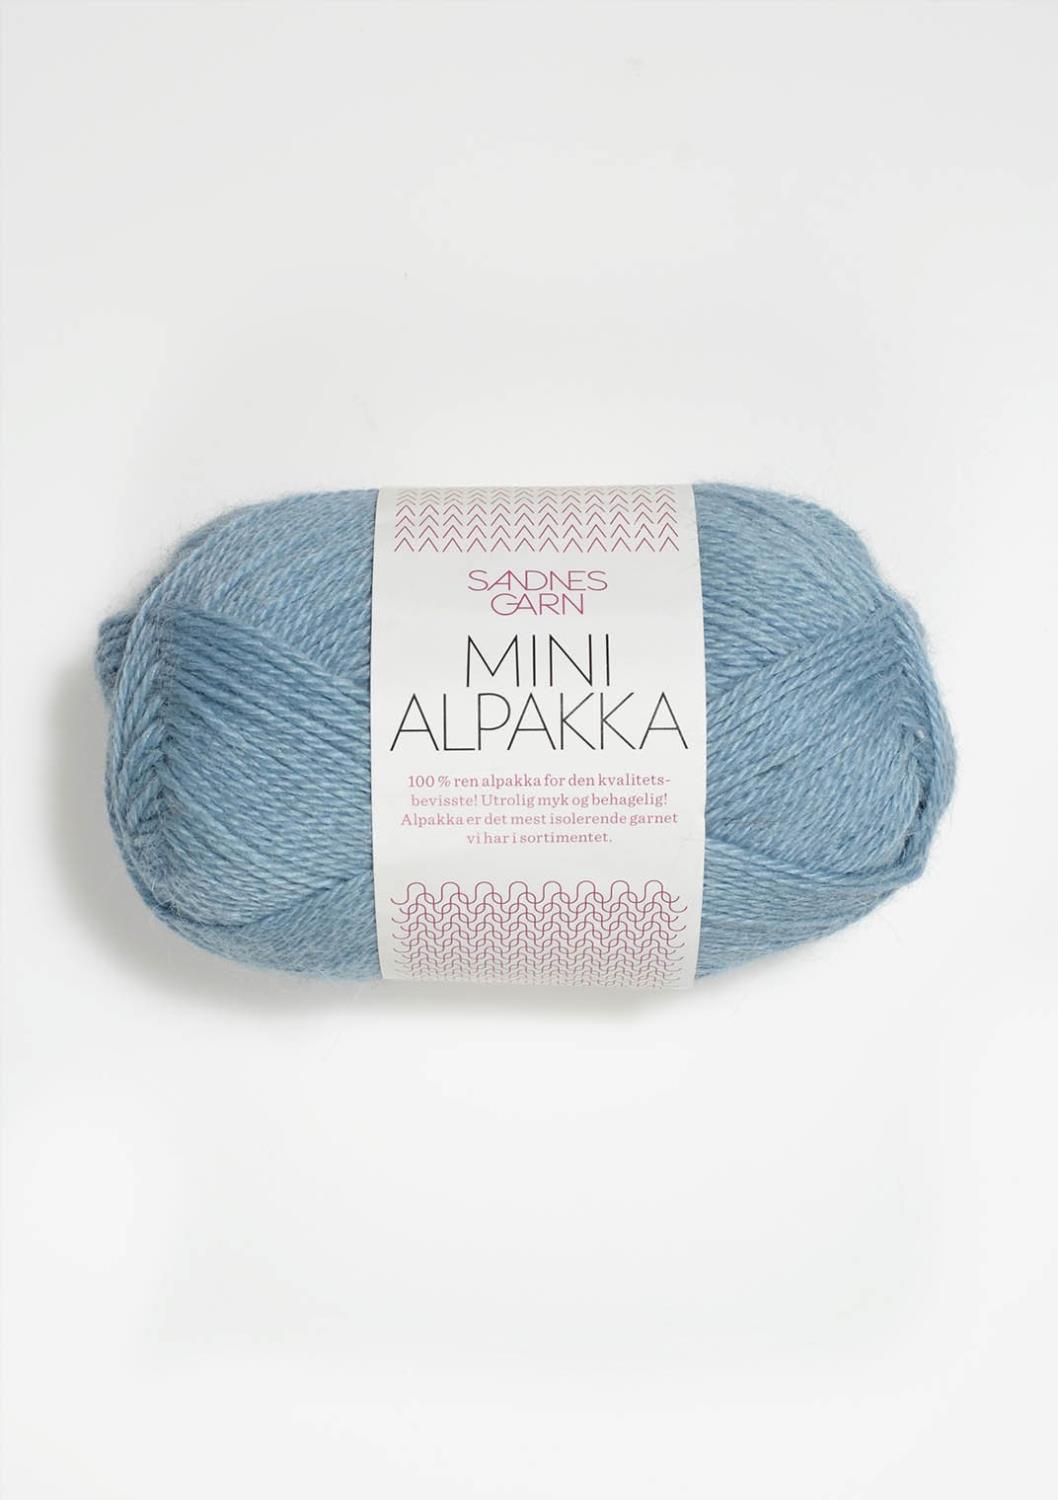 Mini Alpakka Sandnes 6013 - Himmelblå